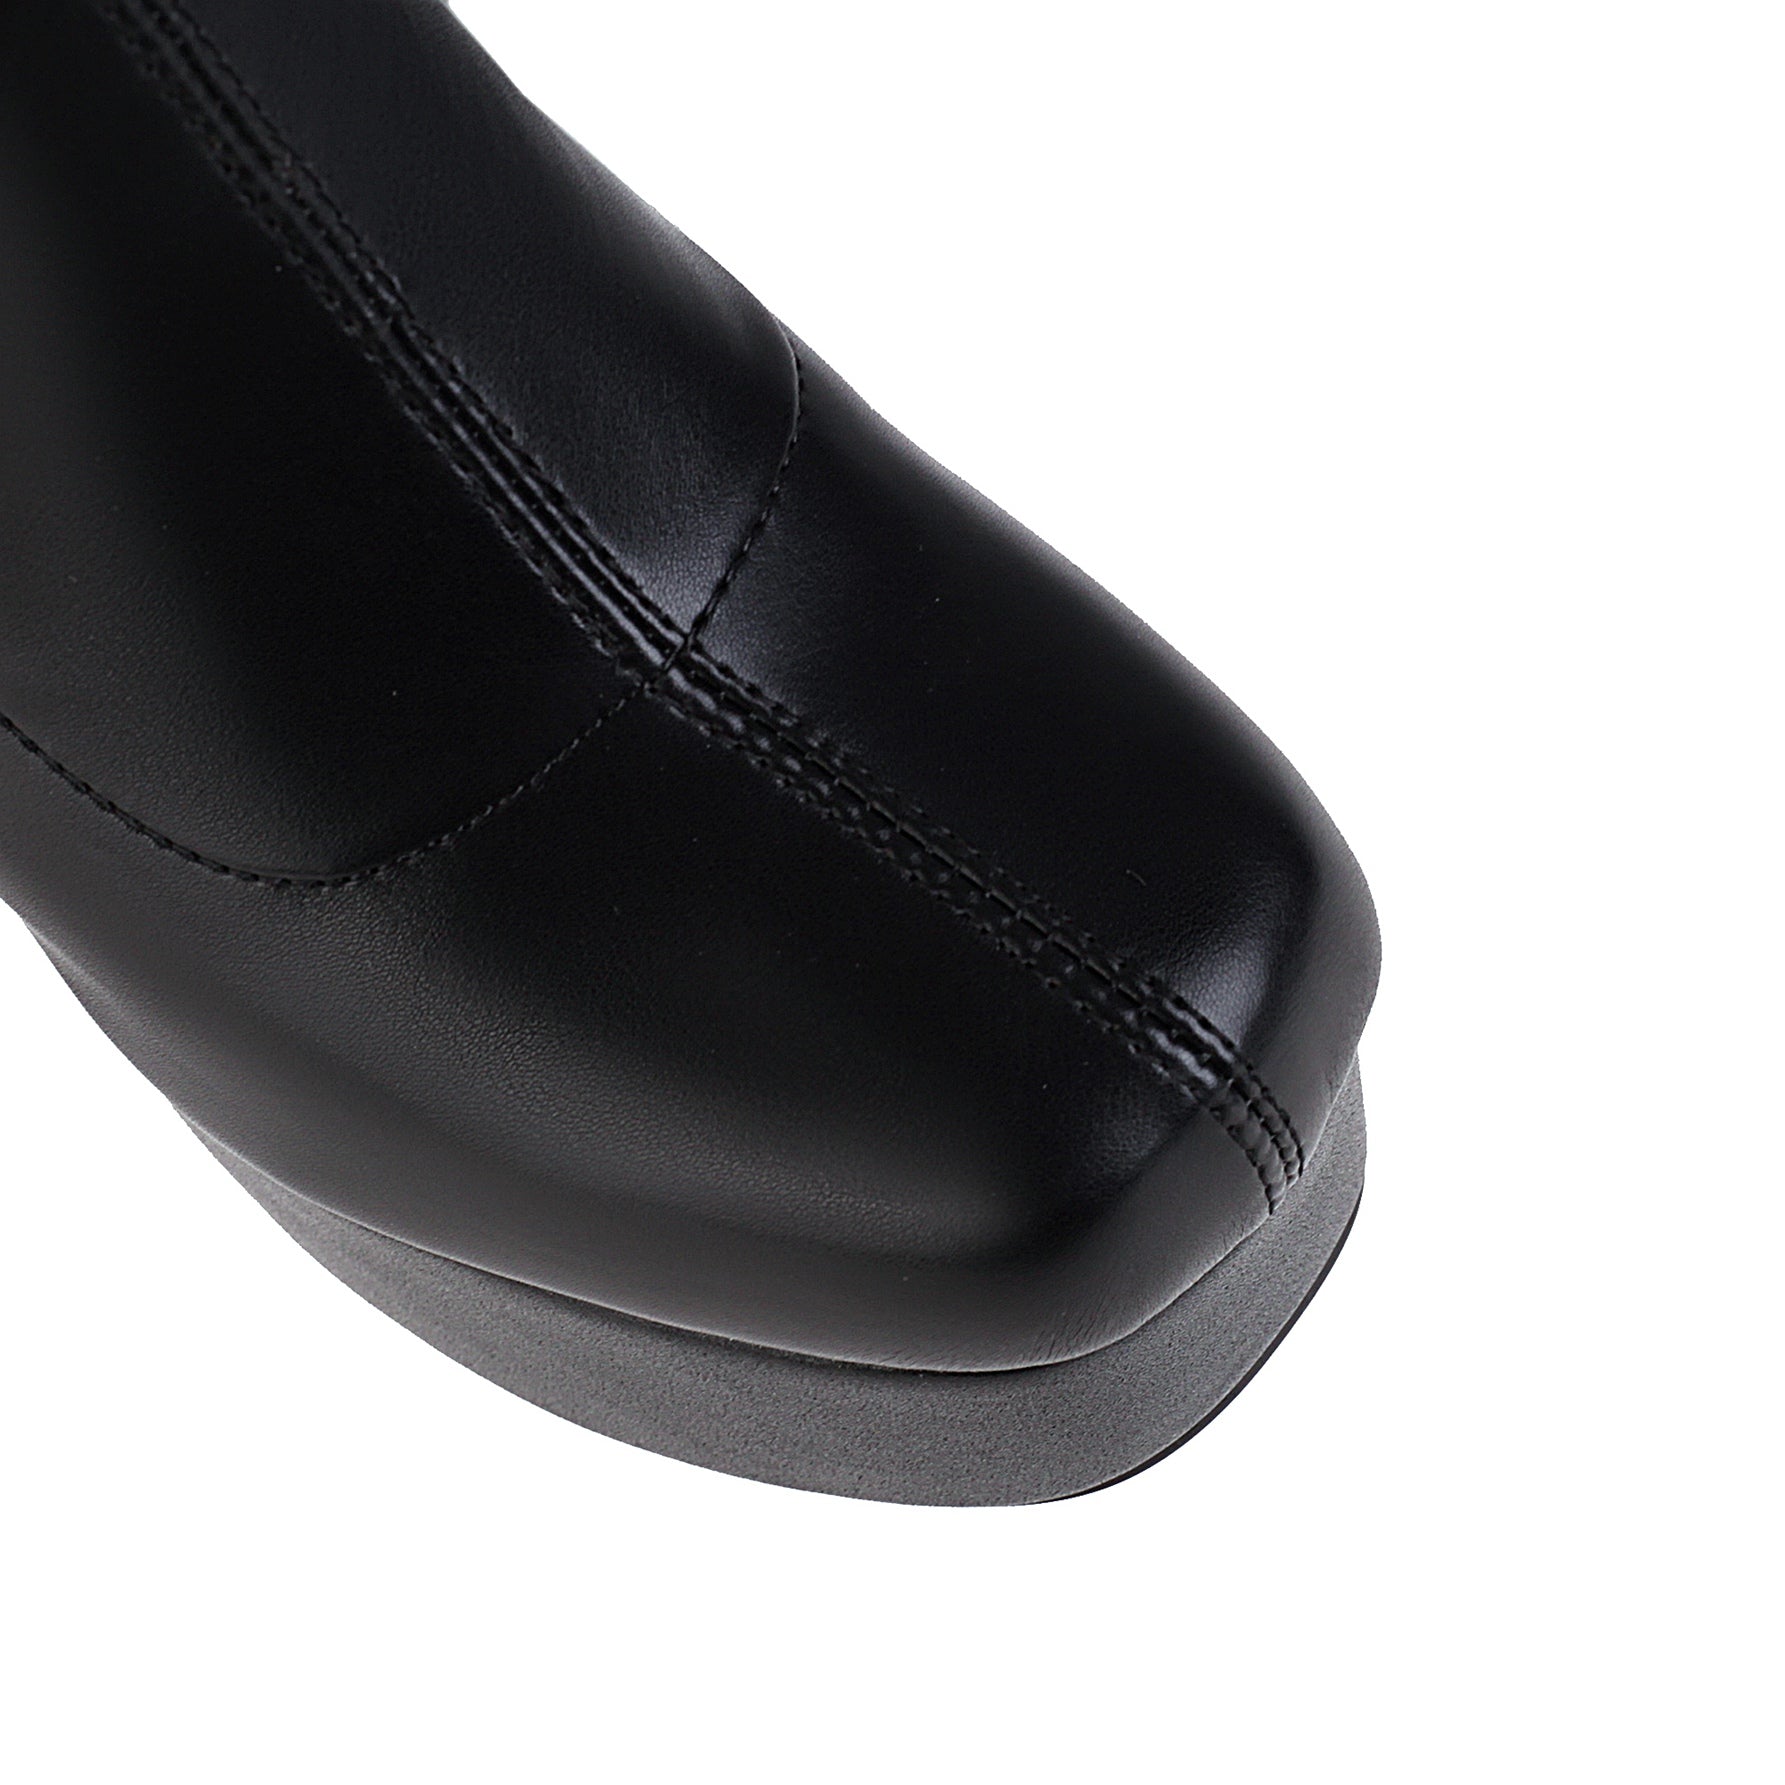 Bigsizeheels Punk thick-heeled slim fashion boots - Black freeshipping - bigsizeheel®-size5-size15 -All Plus Sizes Available!